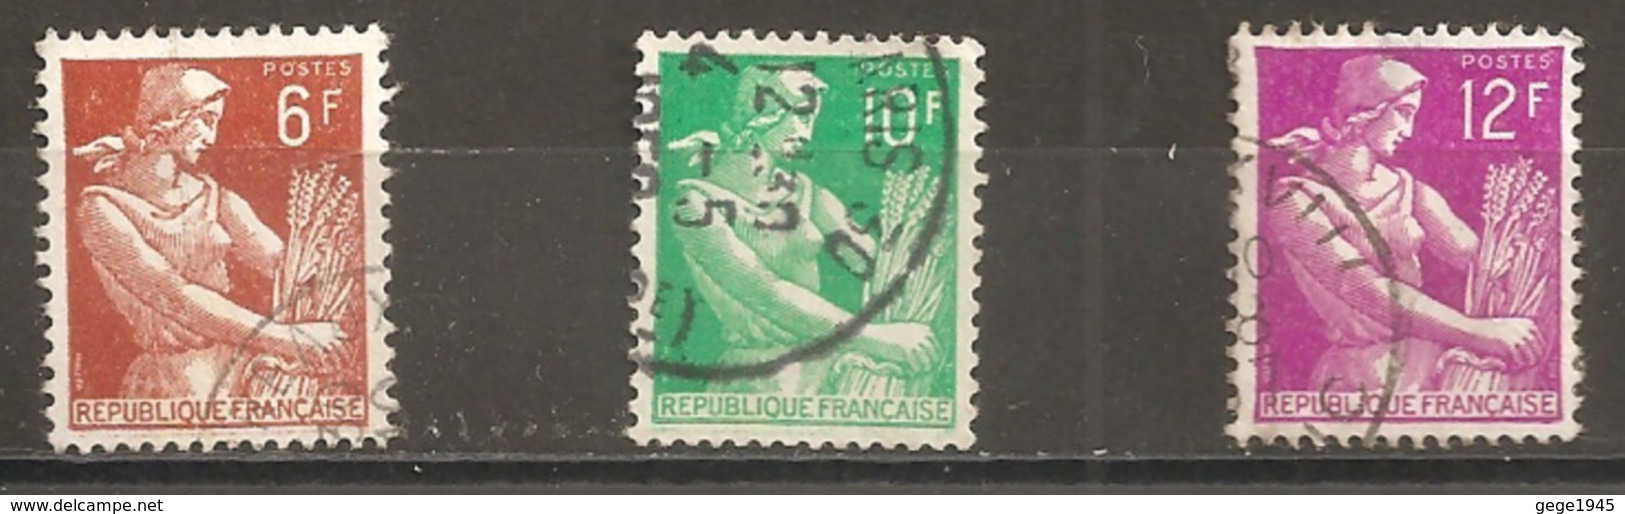 France 1957  Oblitéré   N° 1115  - 1115A  - 1116   -  Type Moissonneuse - 1957-1959 Mäherin